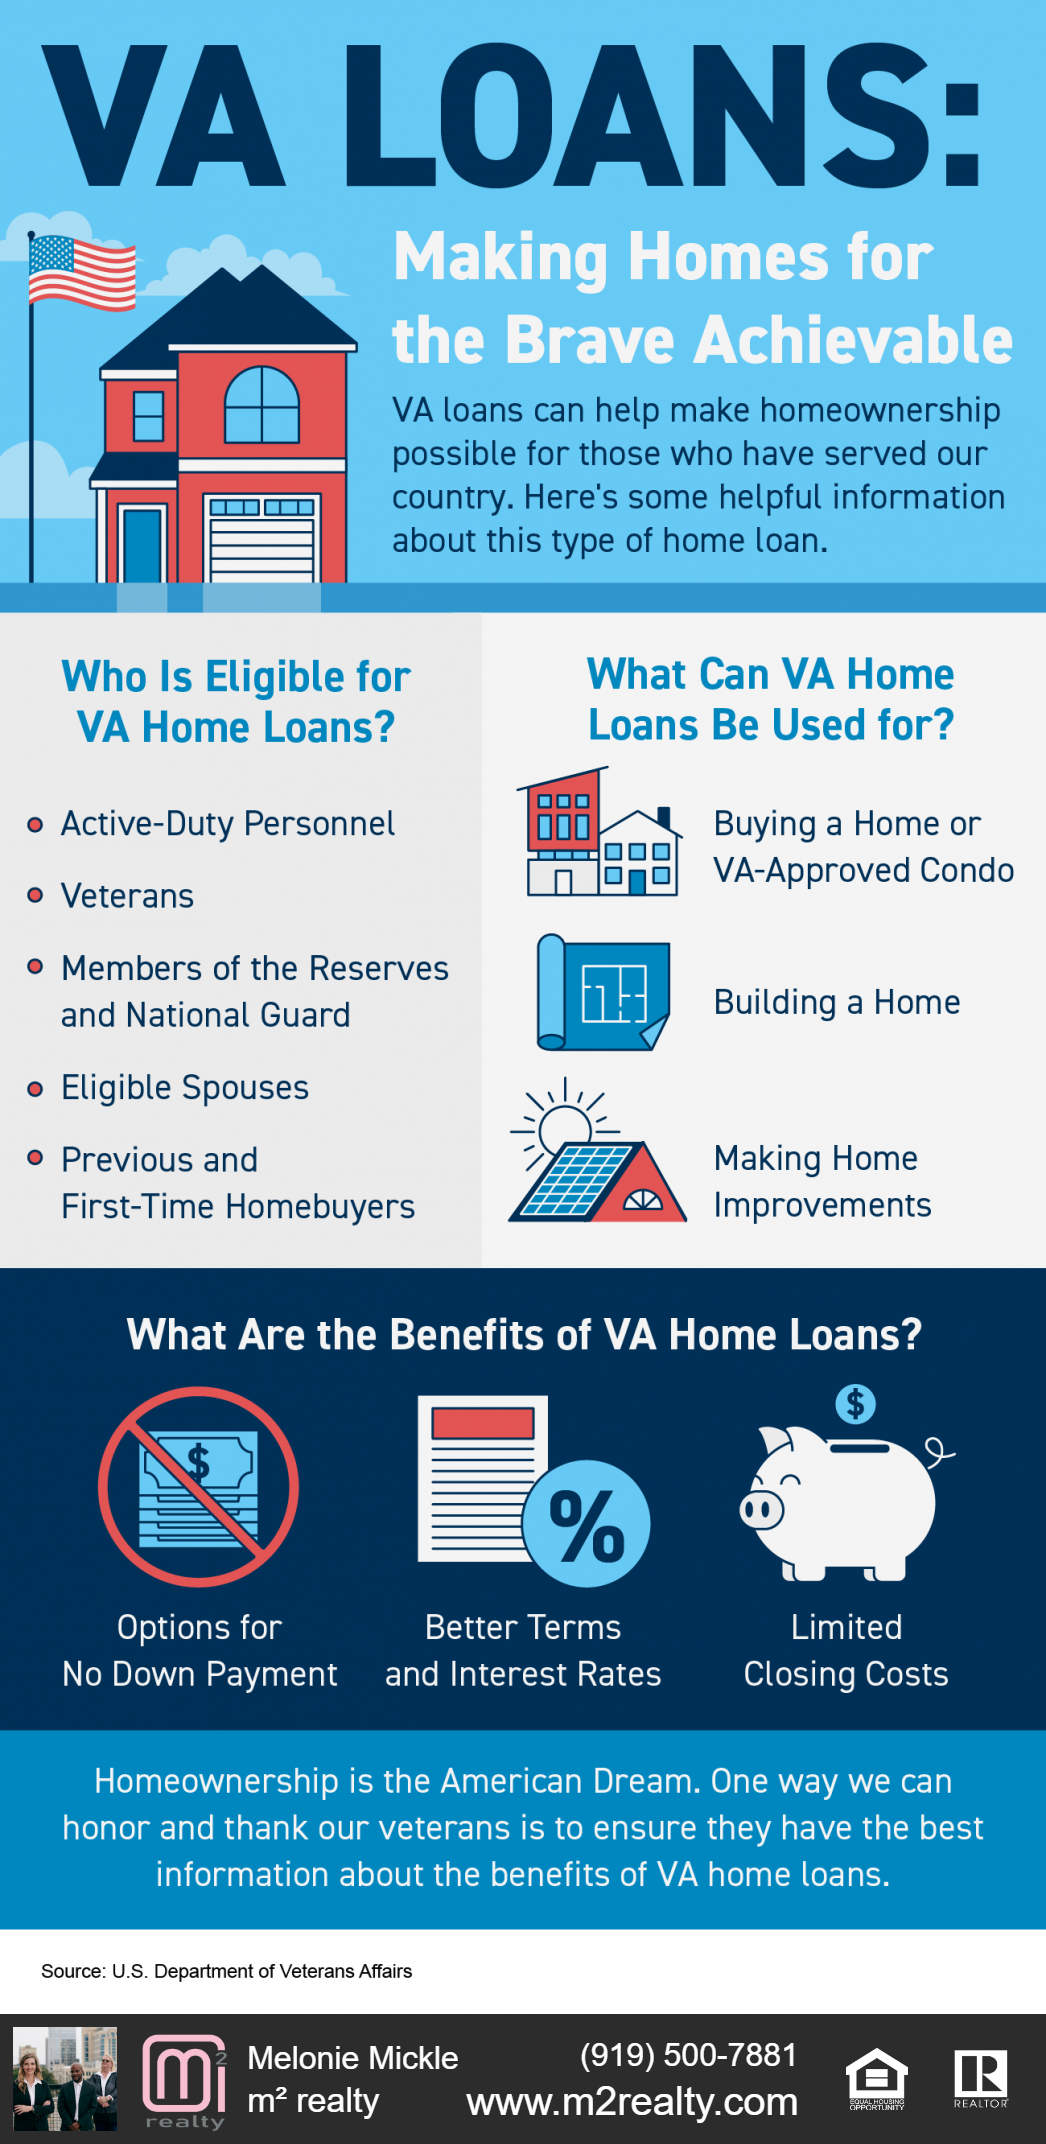 m2 realty discusses VA Loans.